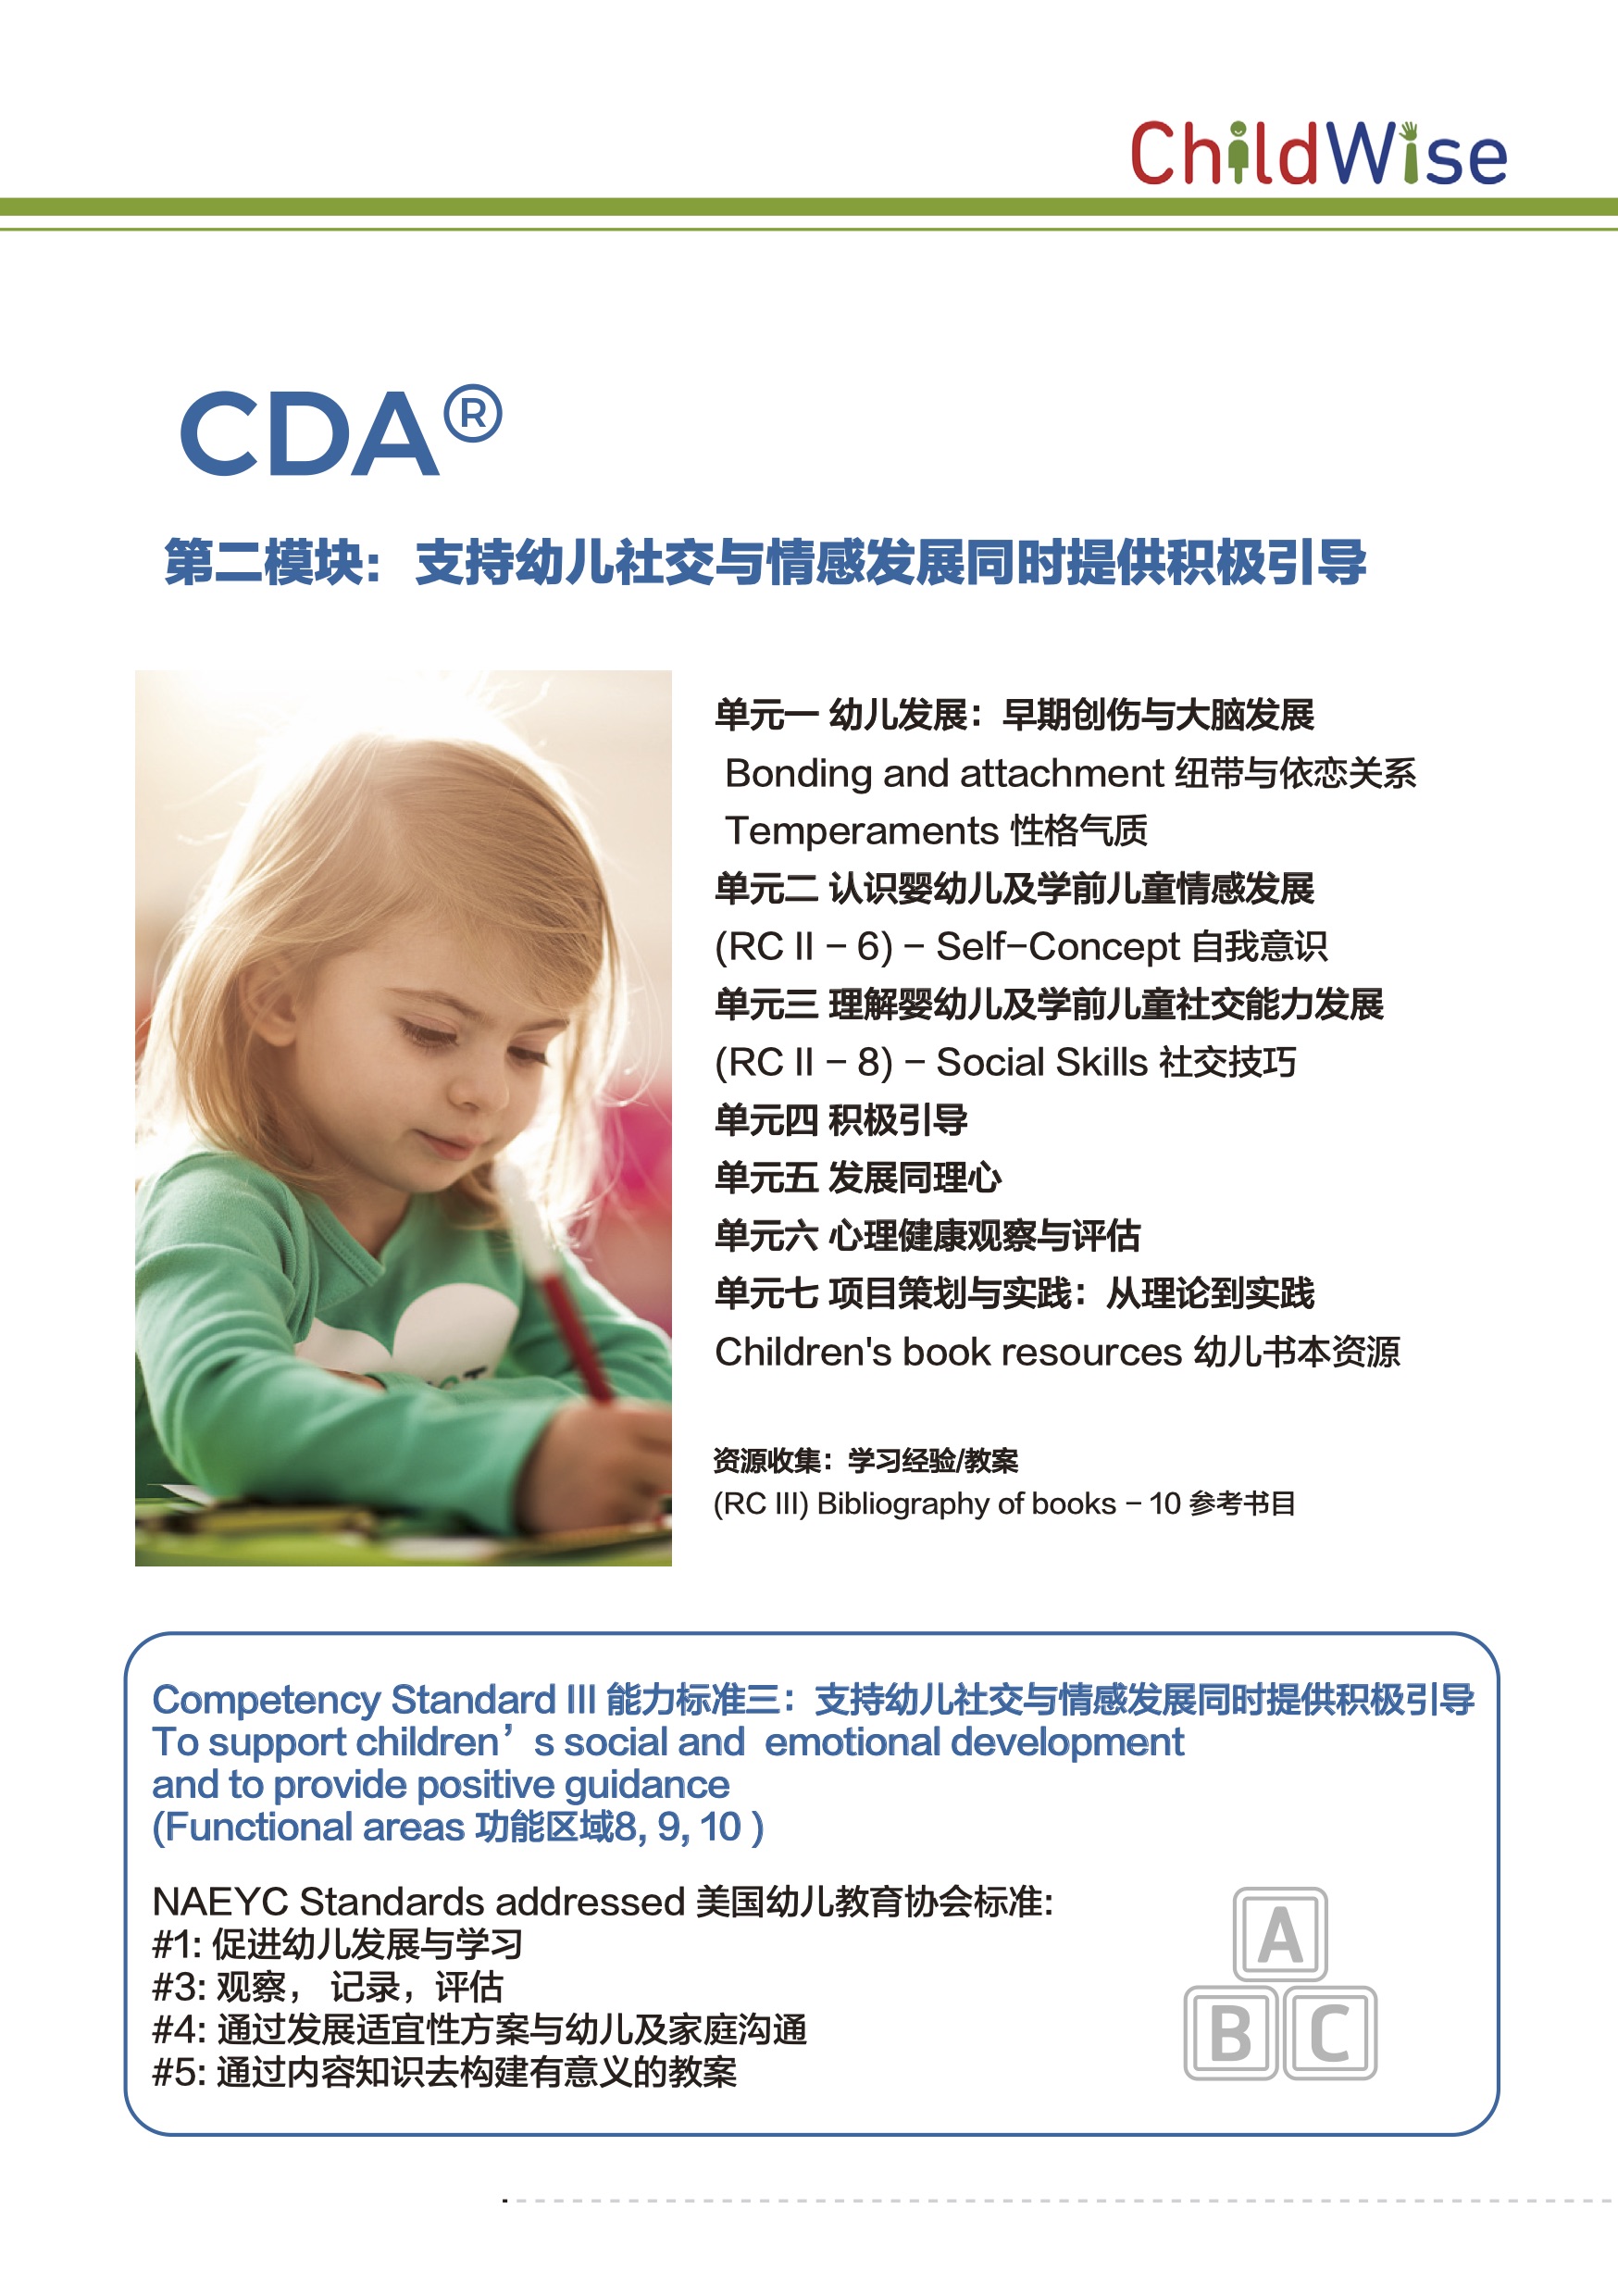 CDA认证课程体系介绍9